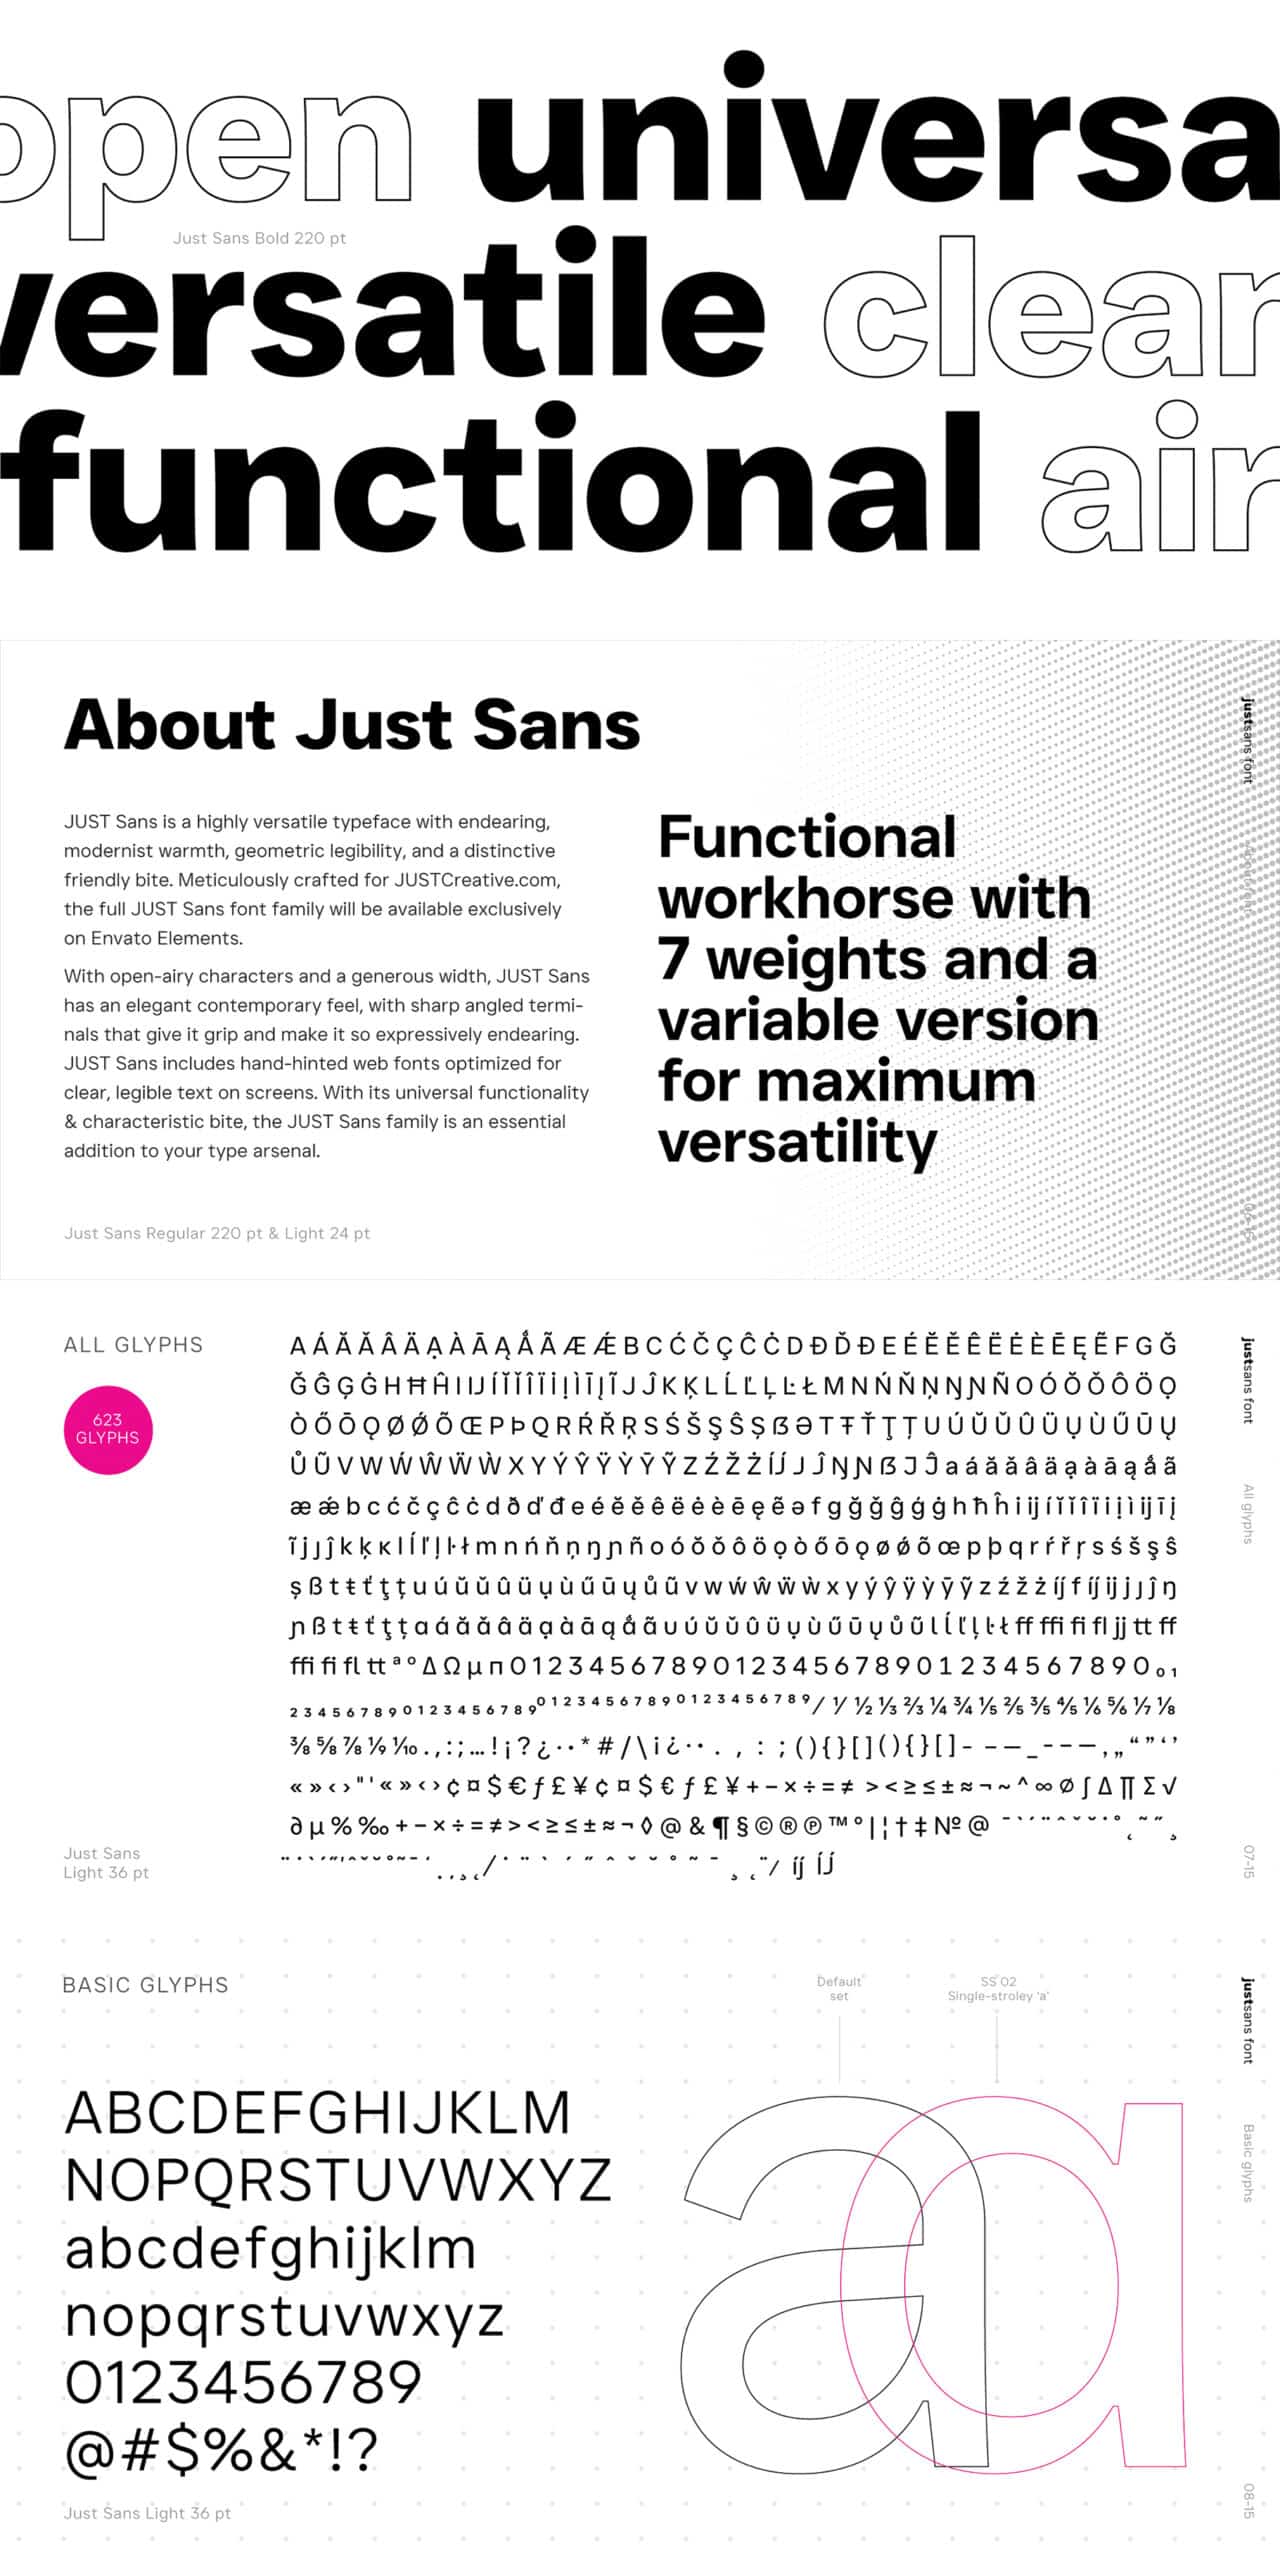 Just Sans® Clean Modern Minimal Geometric Typeface - FREE FONT